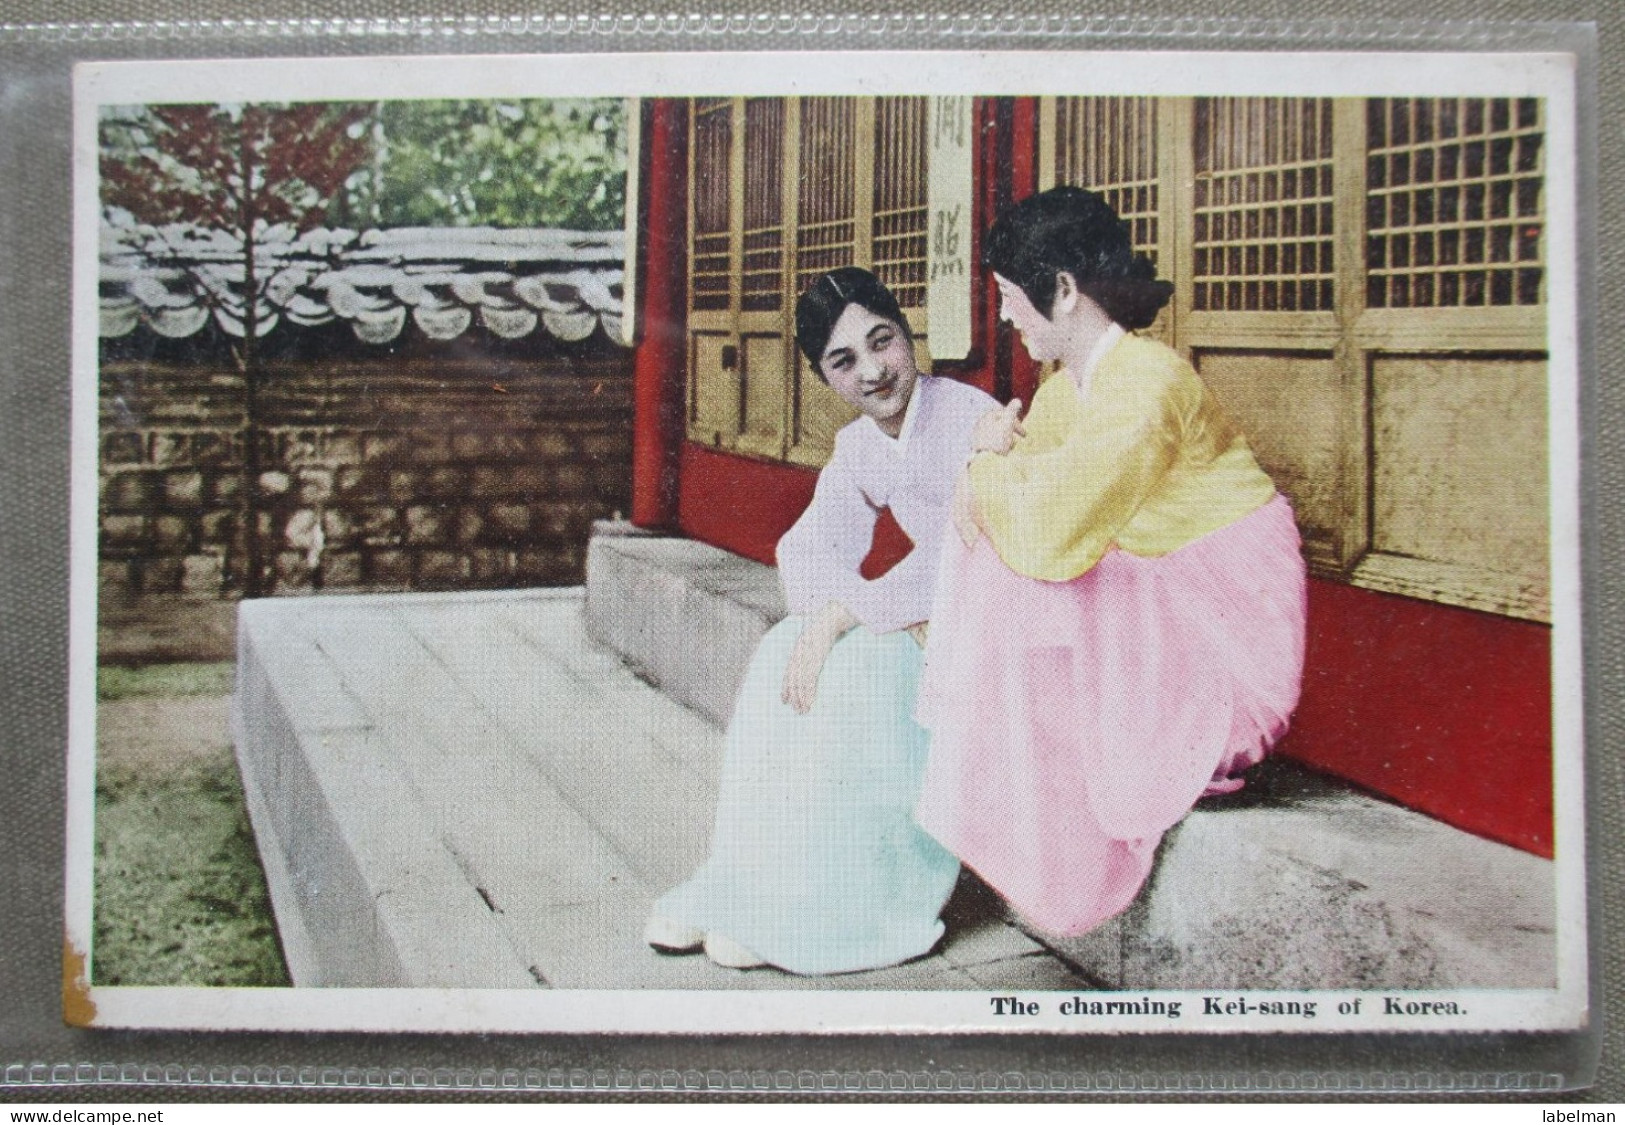 JAPAN KOREA KEI SANG WOMAN NATIONAL COSTUMES POSTCARD ANSICHTSKARTE CARTOLINA PHOTO CARD CARTE POSTALE CP PC AK KARTE - Osaka